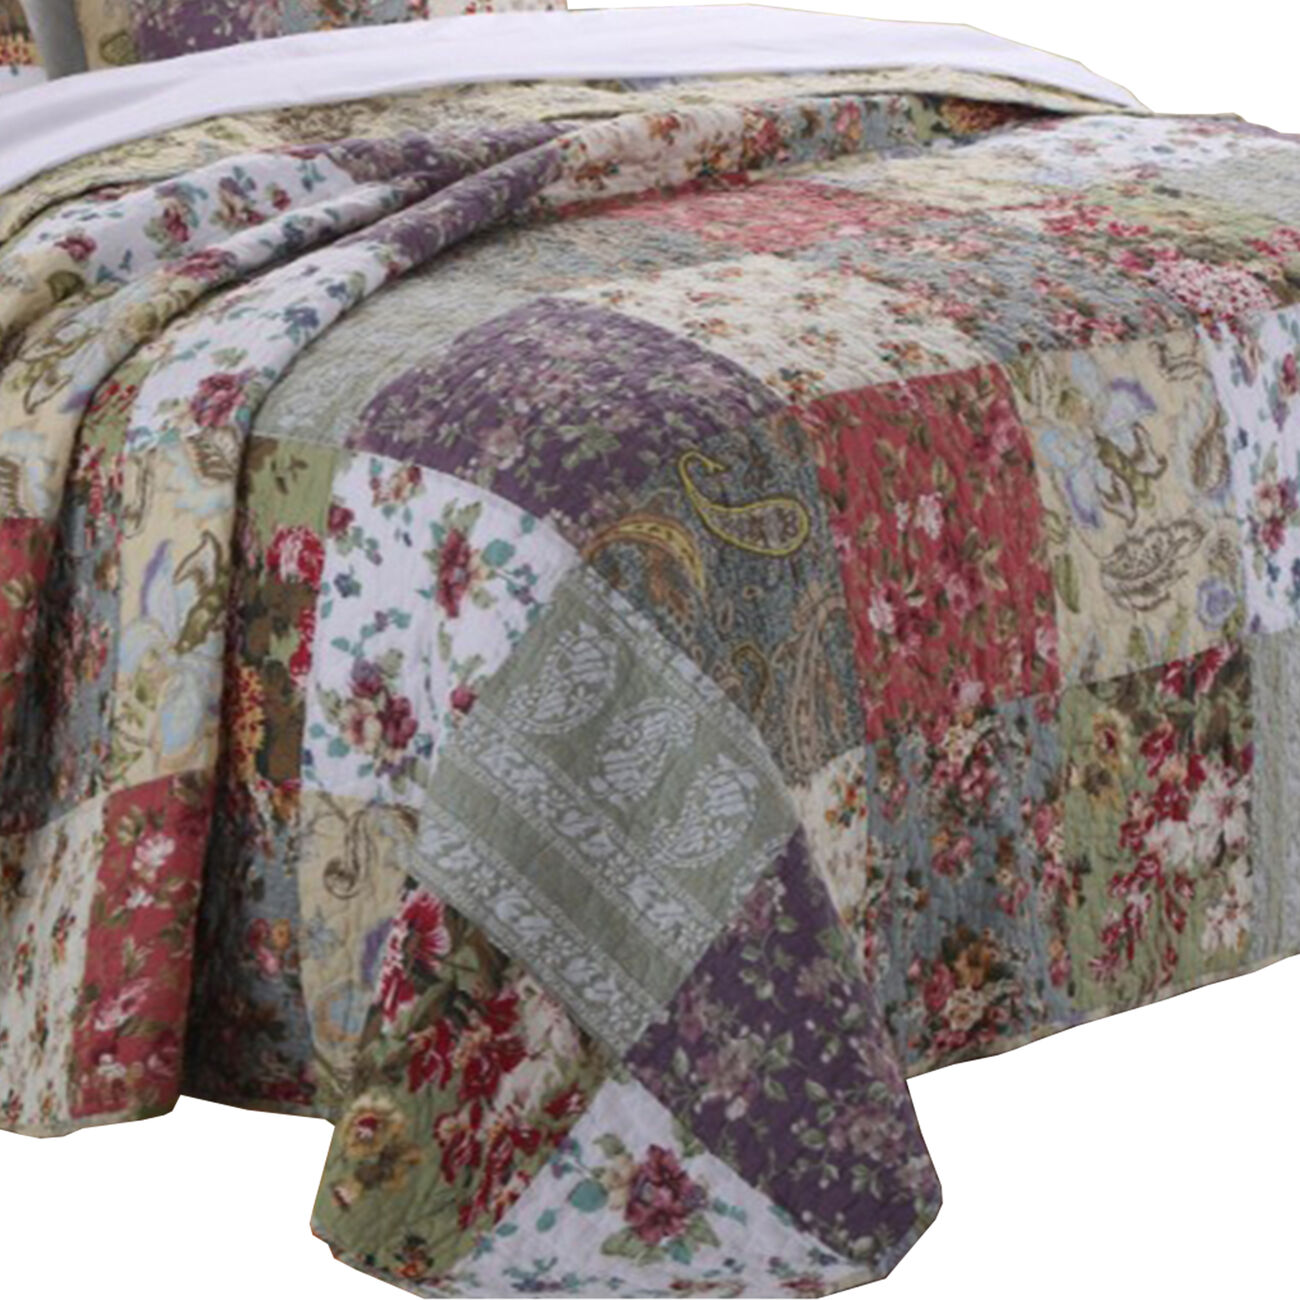 Chicago 3 Piece Fabric Queen Bedspread Set with Jacobean Prints, Multicolor